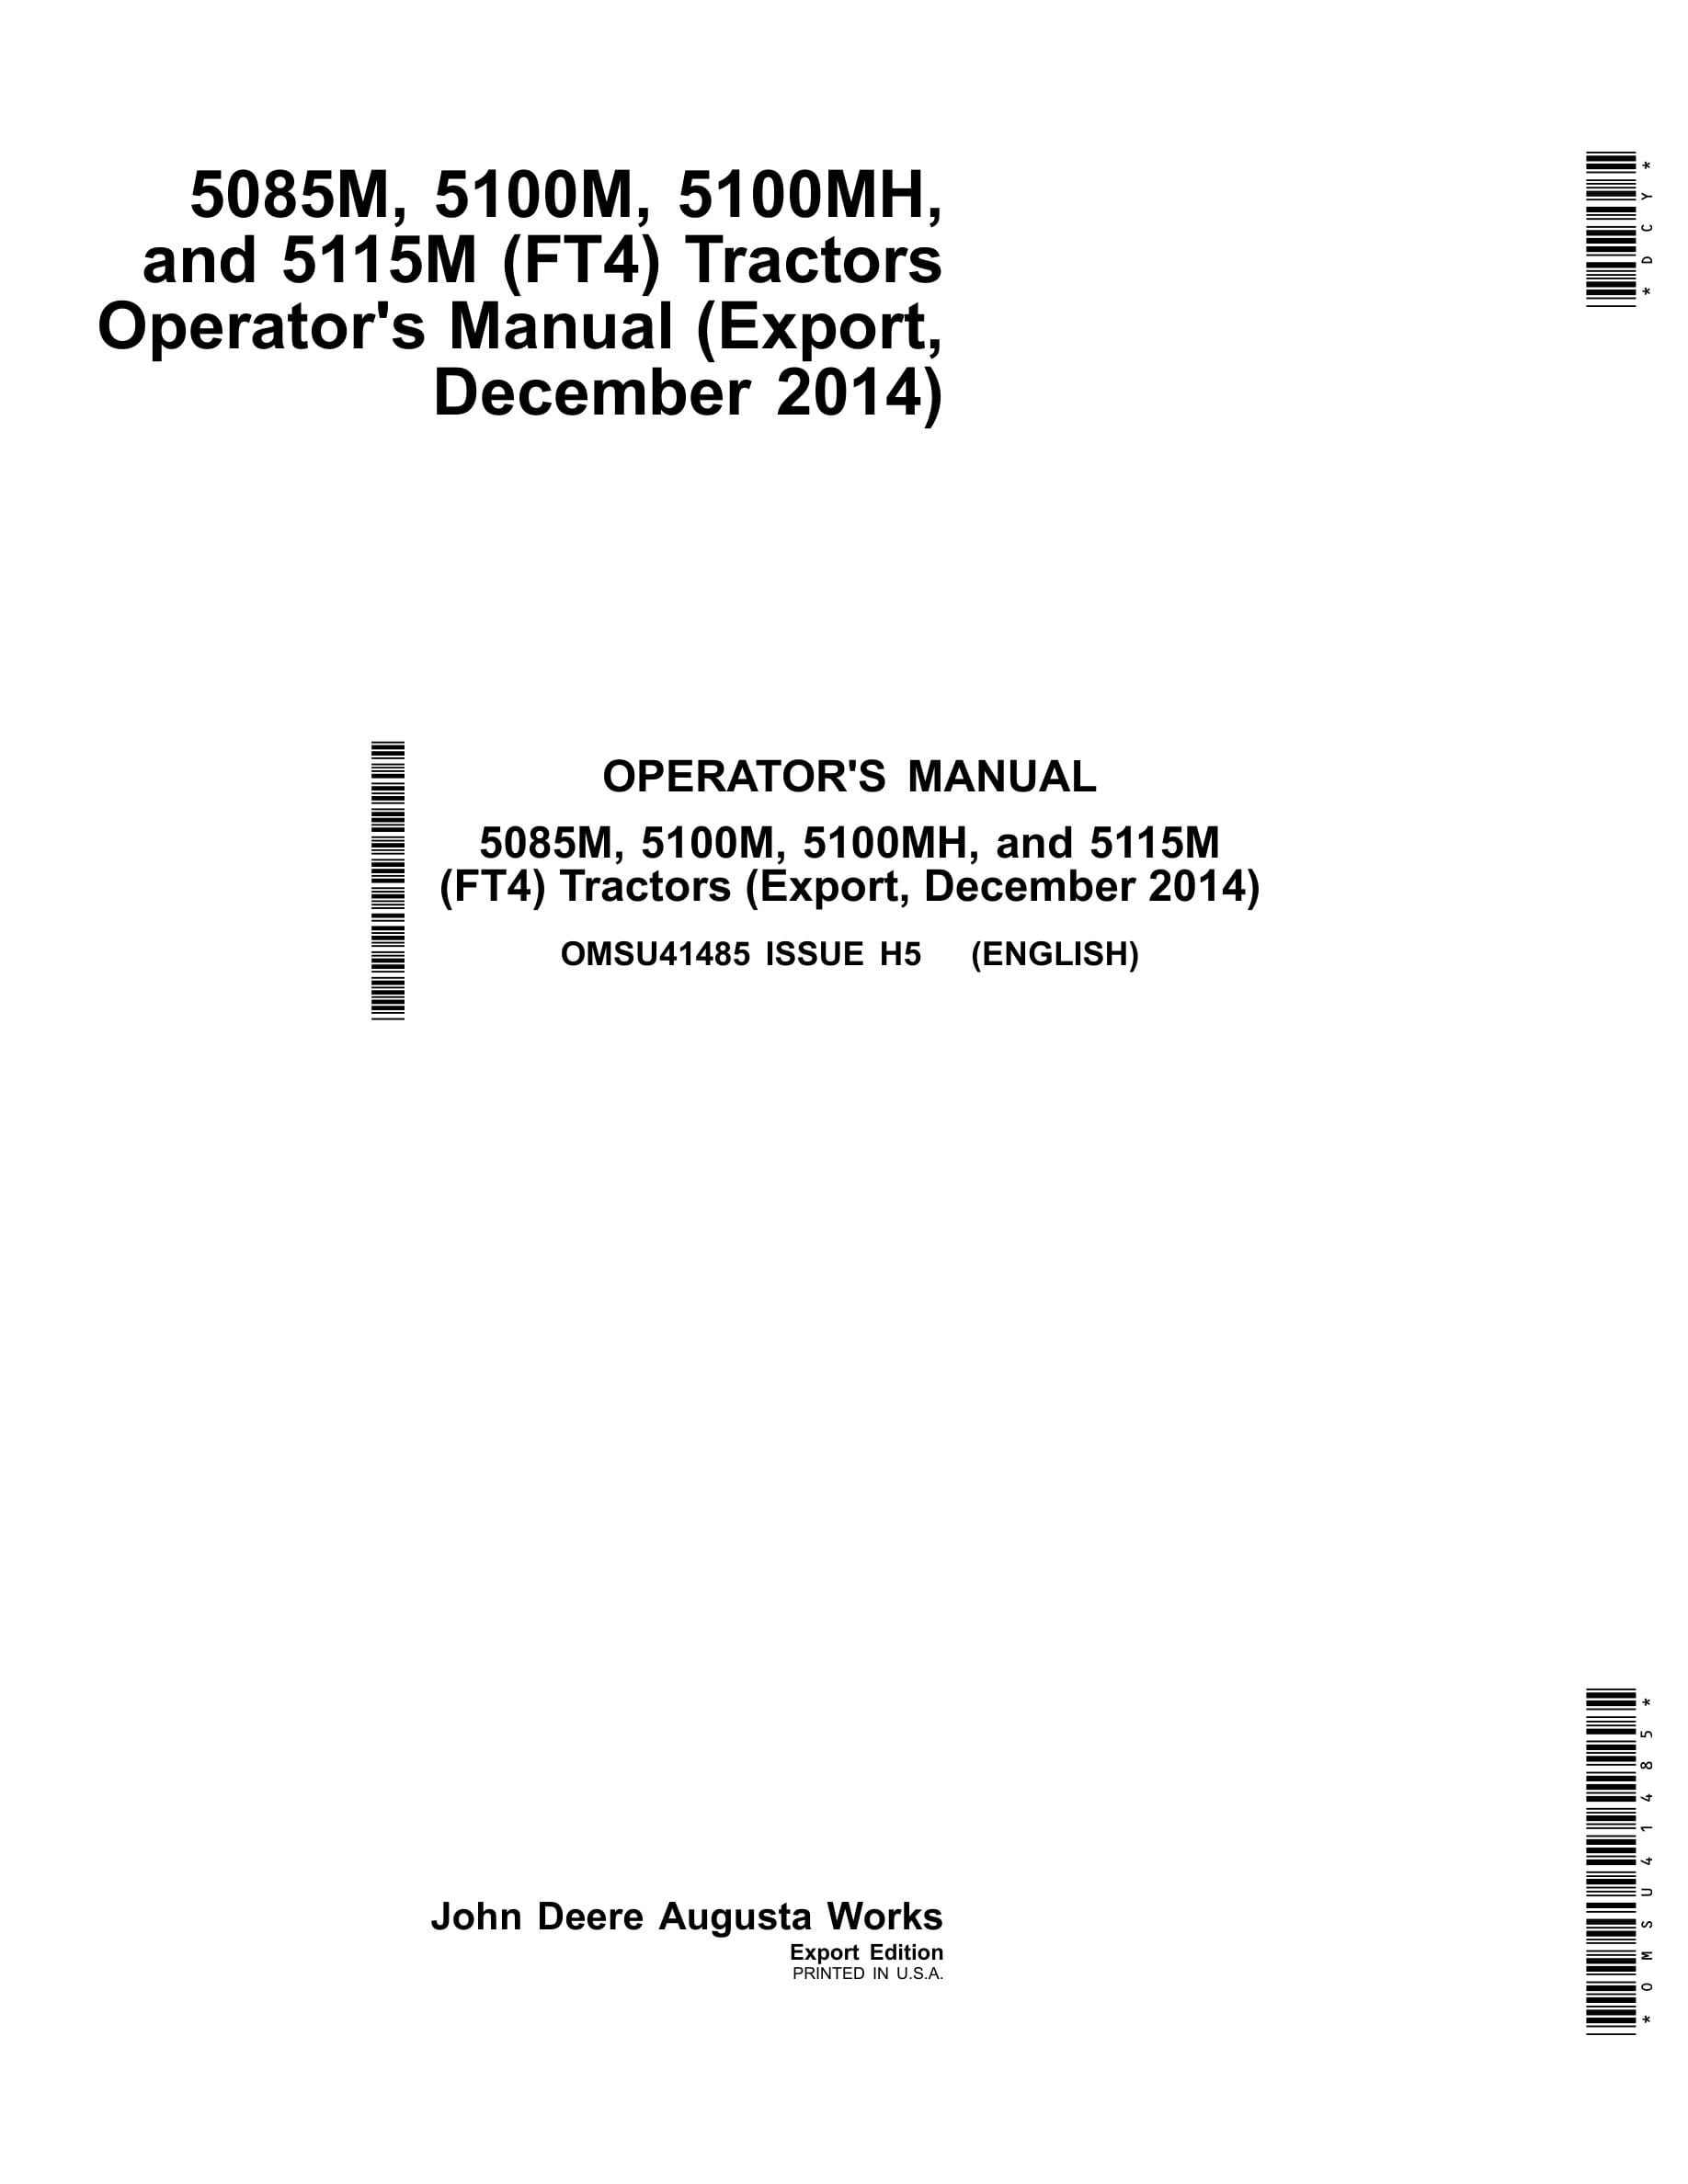 John Deere 5085m, 5100m, 5100mh, And 5115m (ft4) Tractors Operator Manuals OMSU41485-1